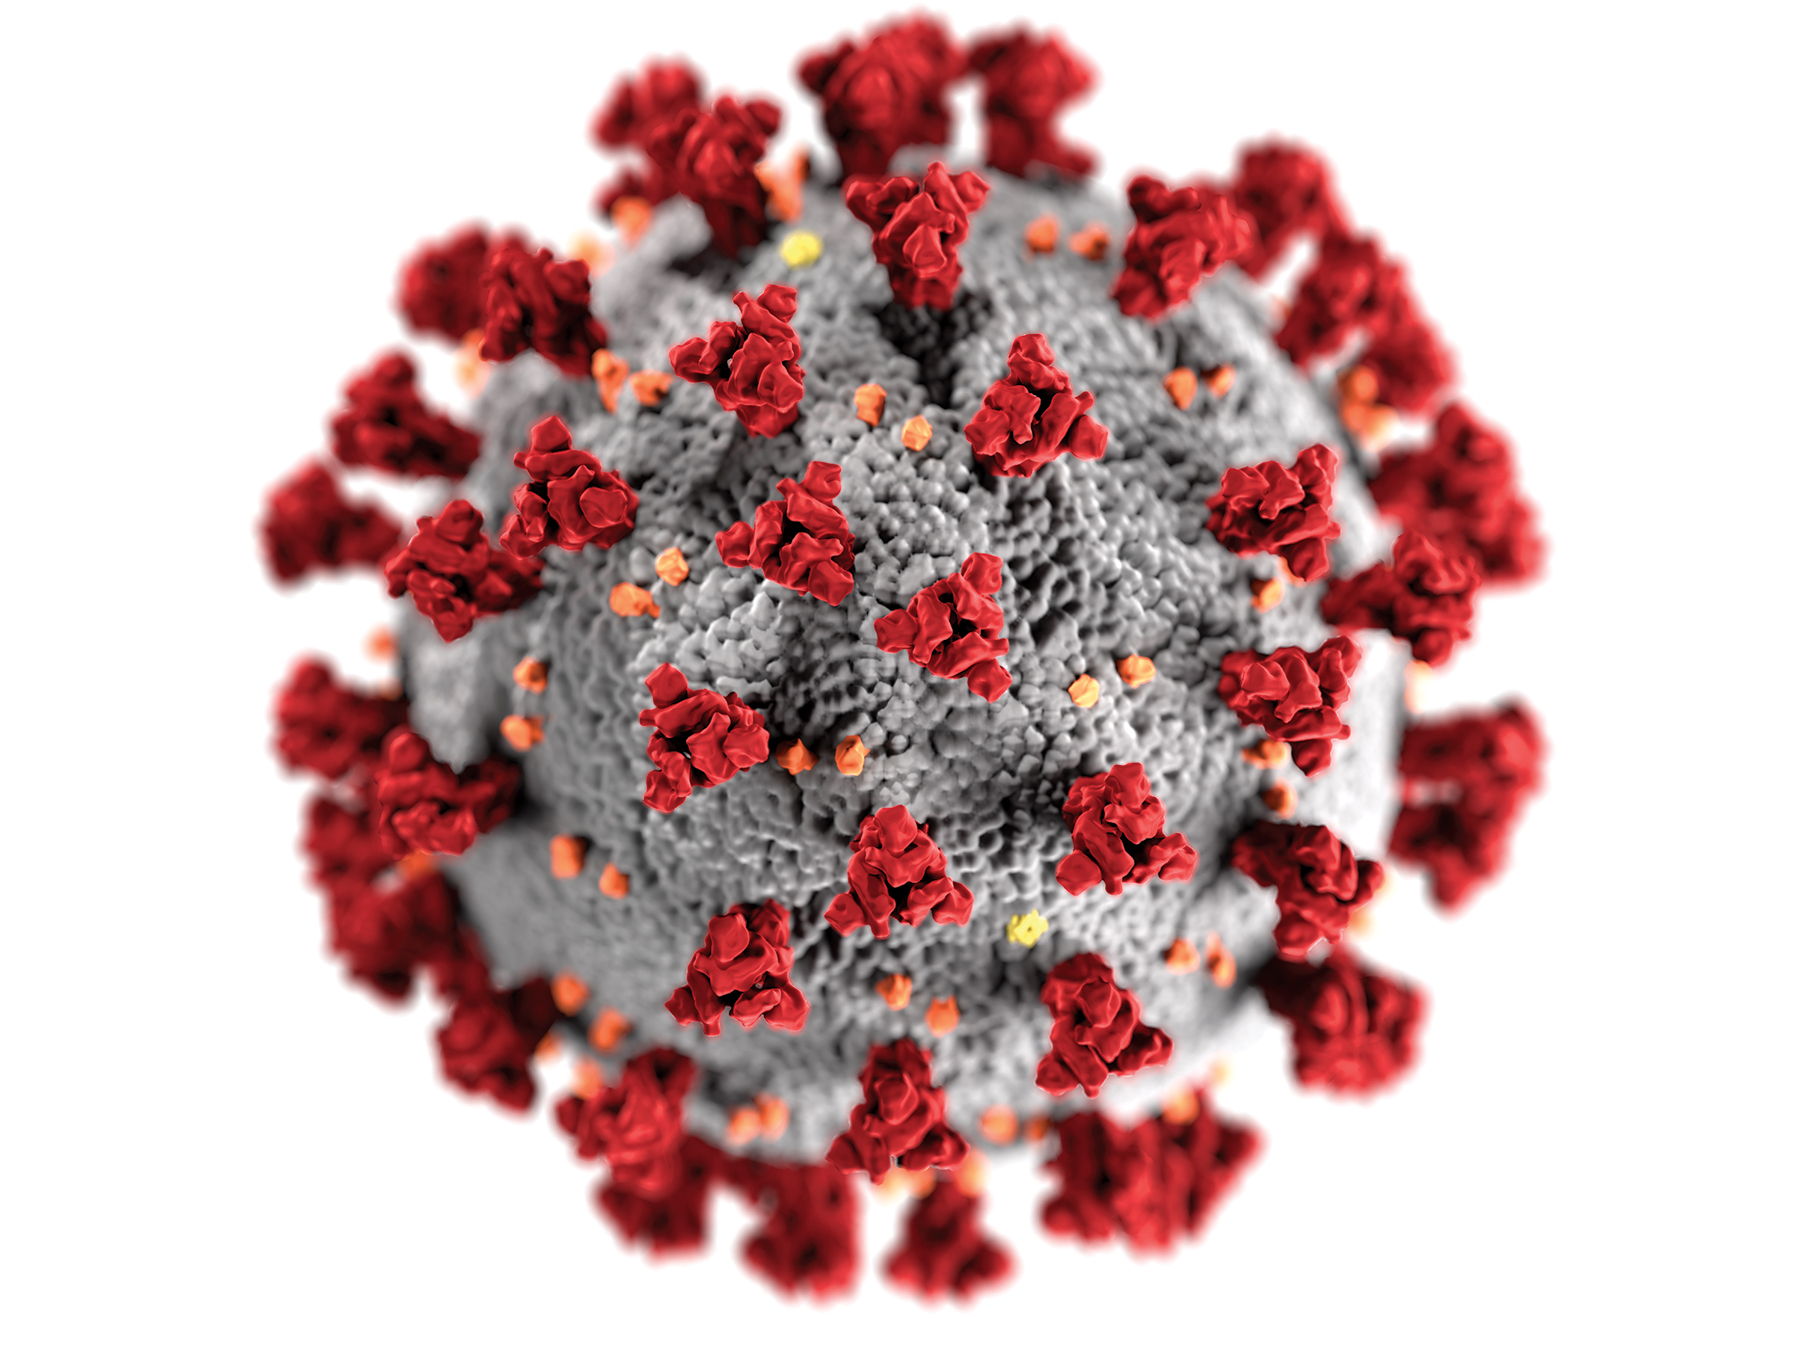 A microscopy image of the COVID-19 virus.